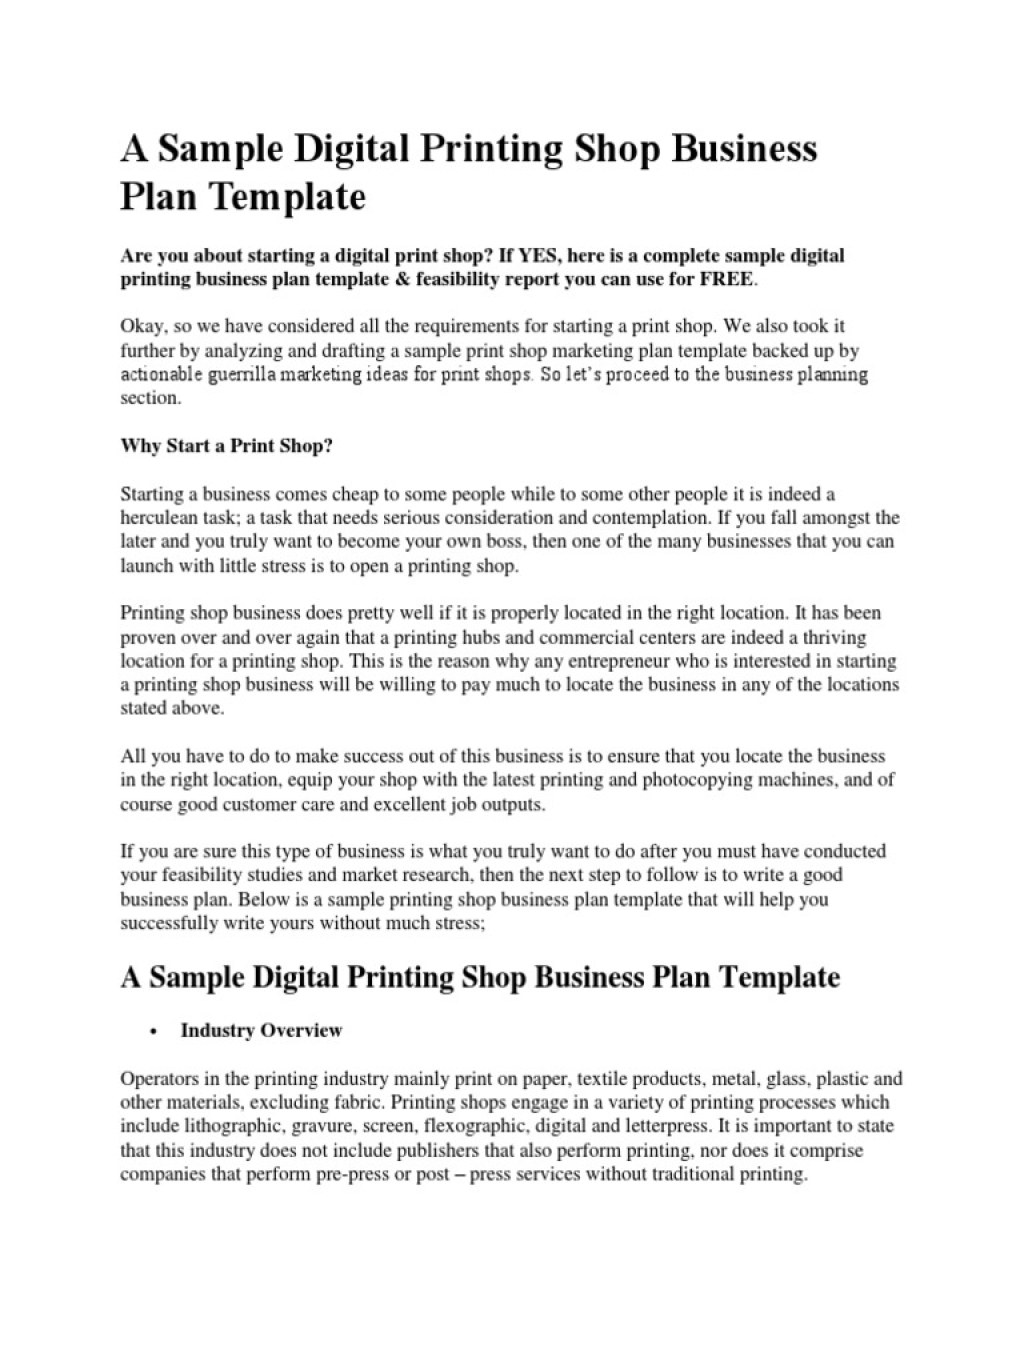 a sample digital printing shop business plan template pdf 1